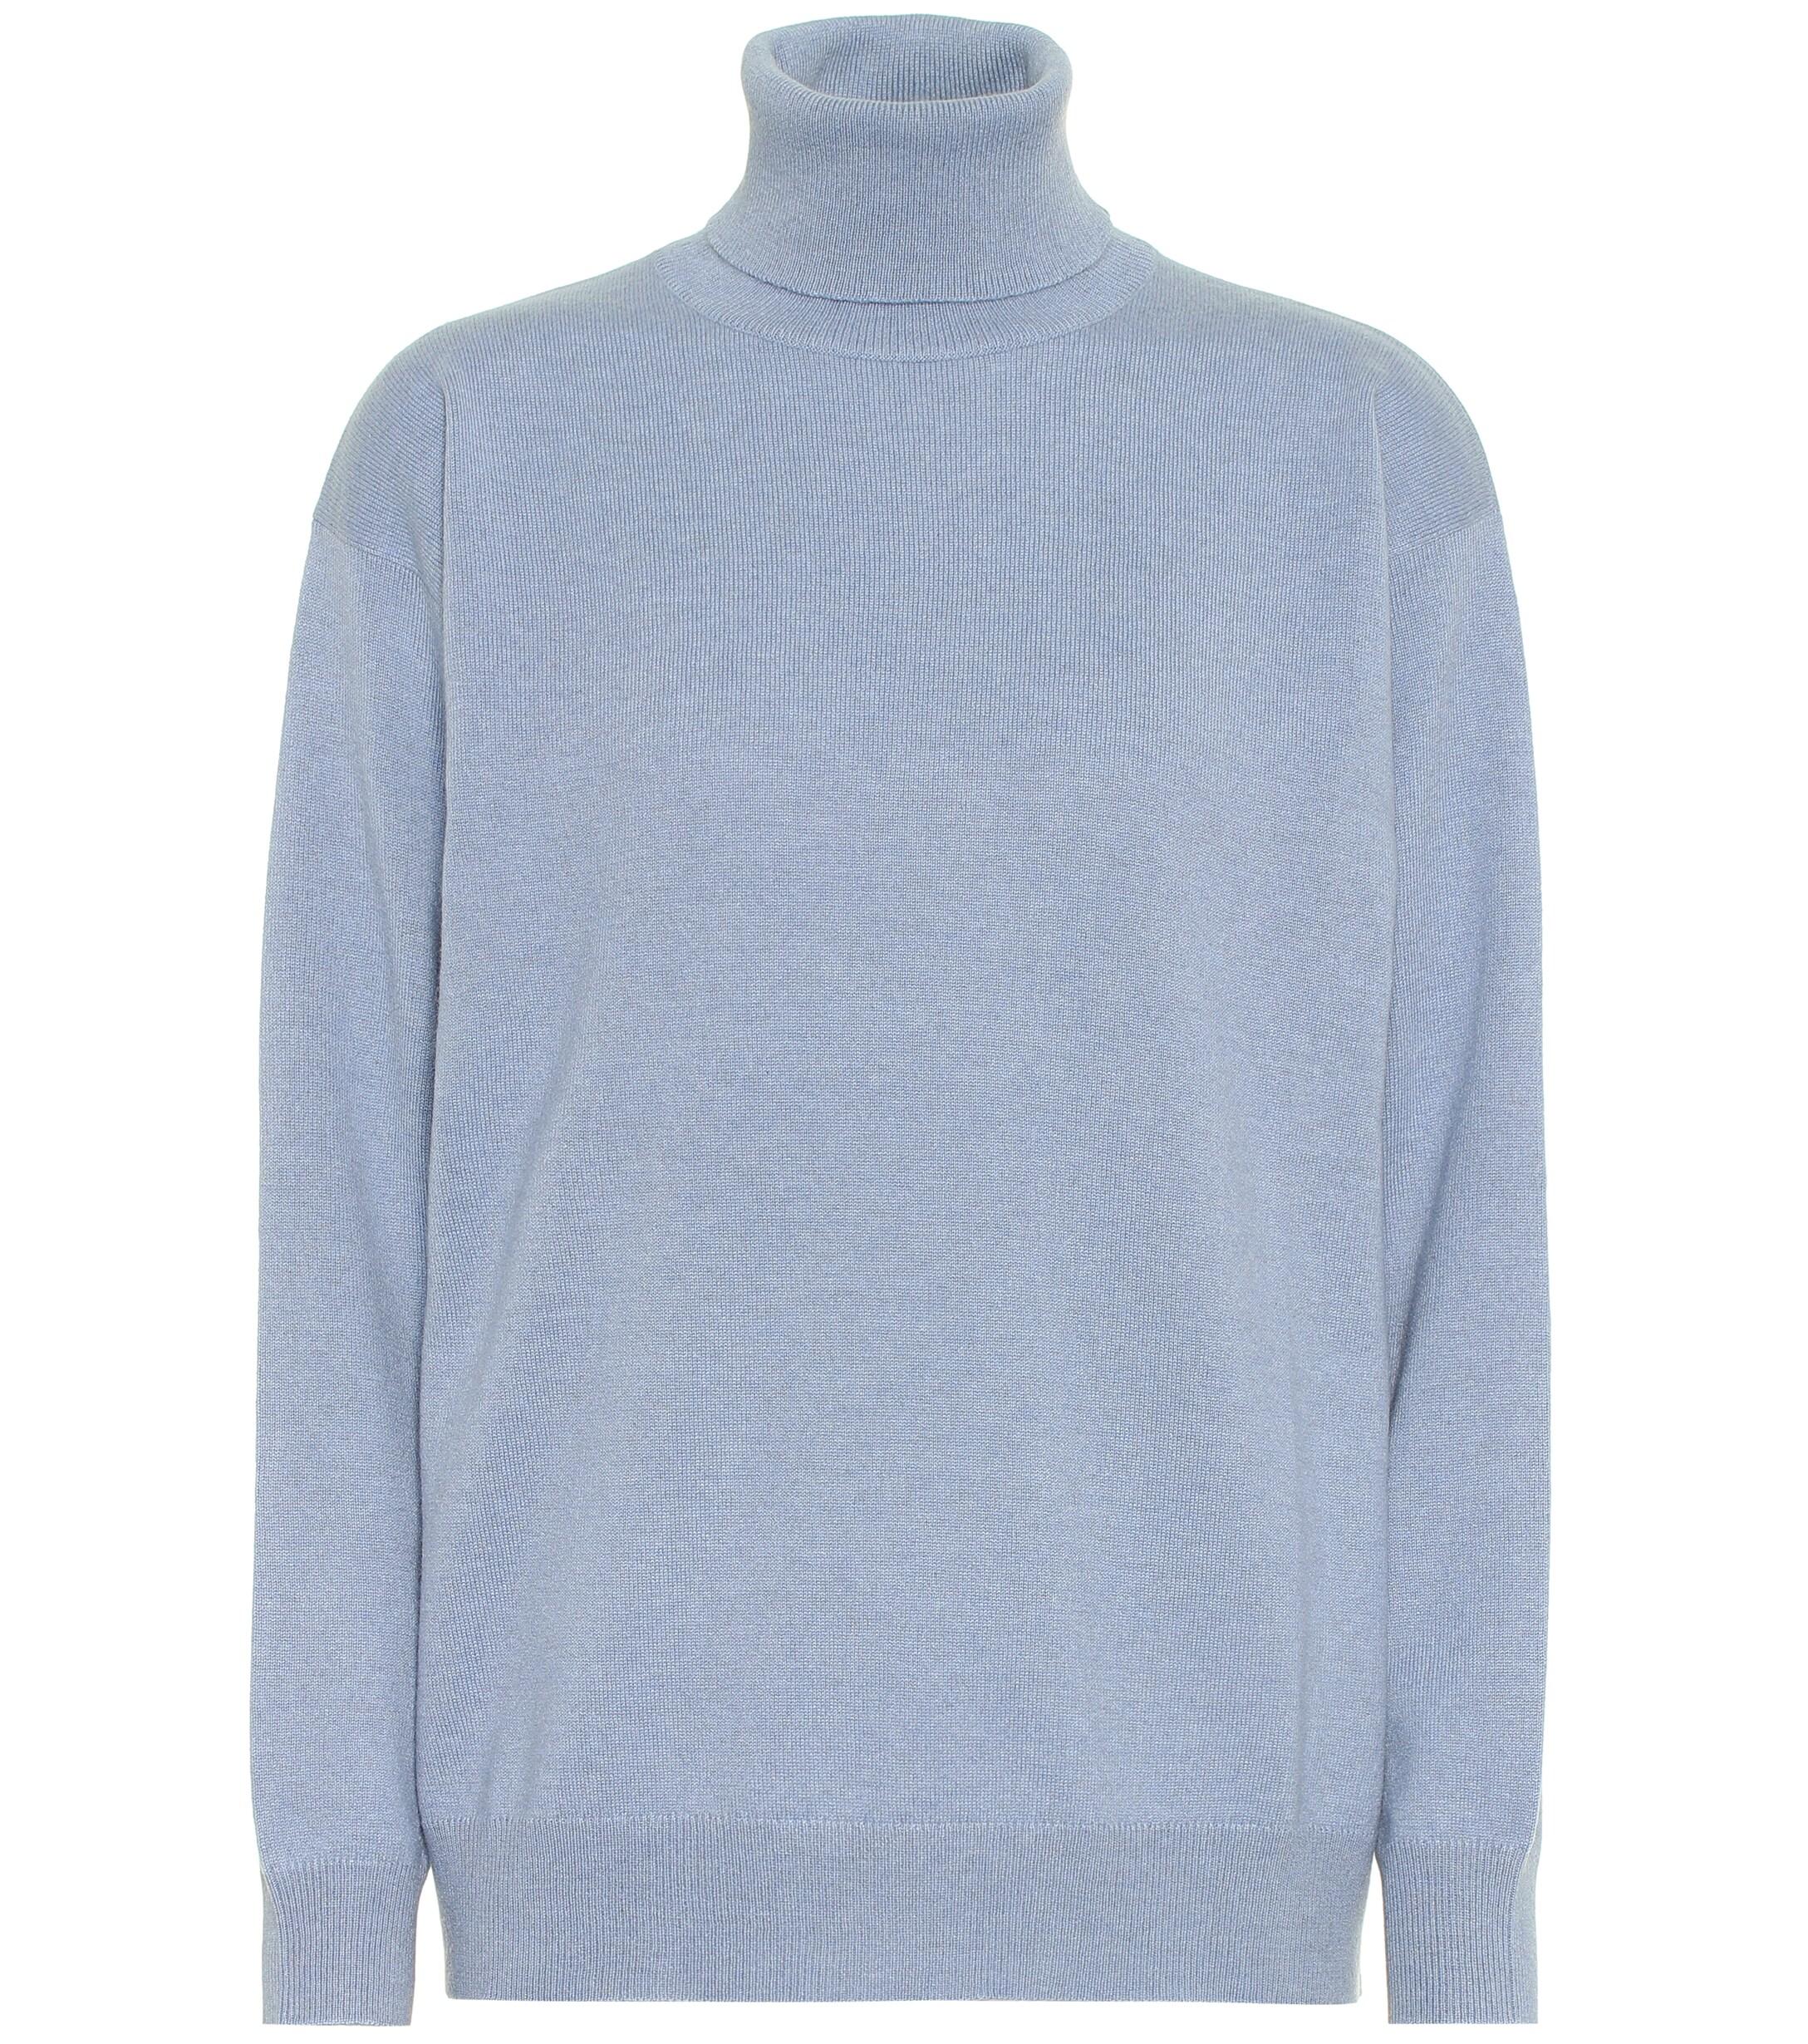 Brunello Cucinelli Cashmere Turtleneck Sweater in Blue - Lyst